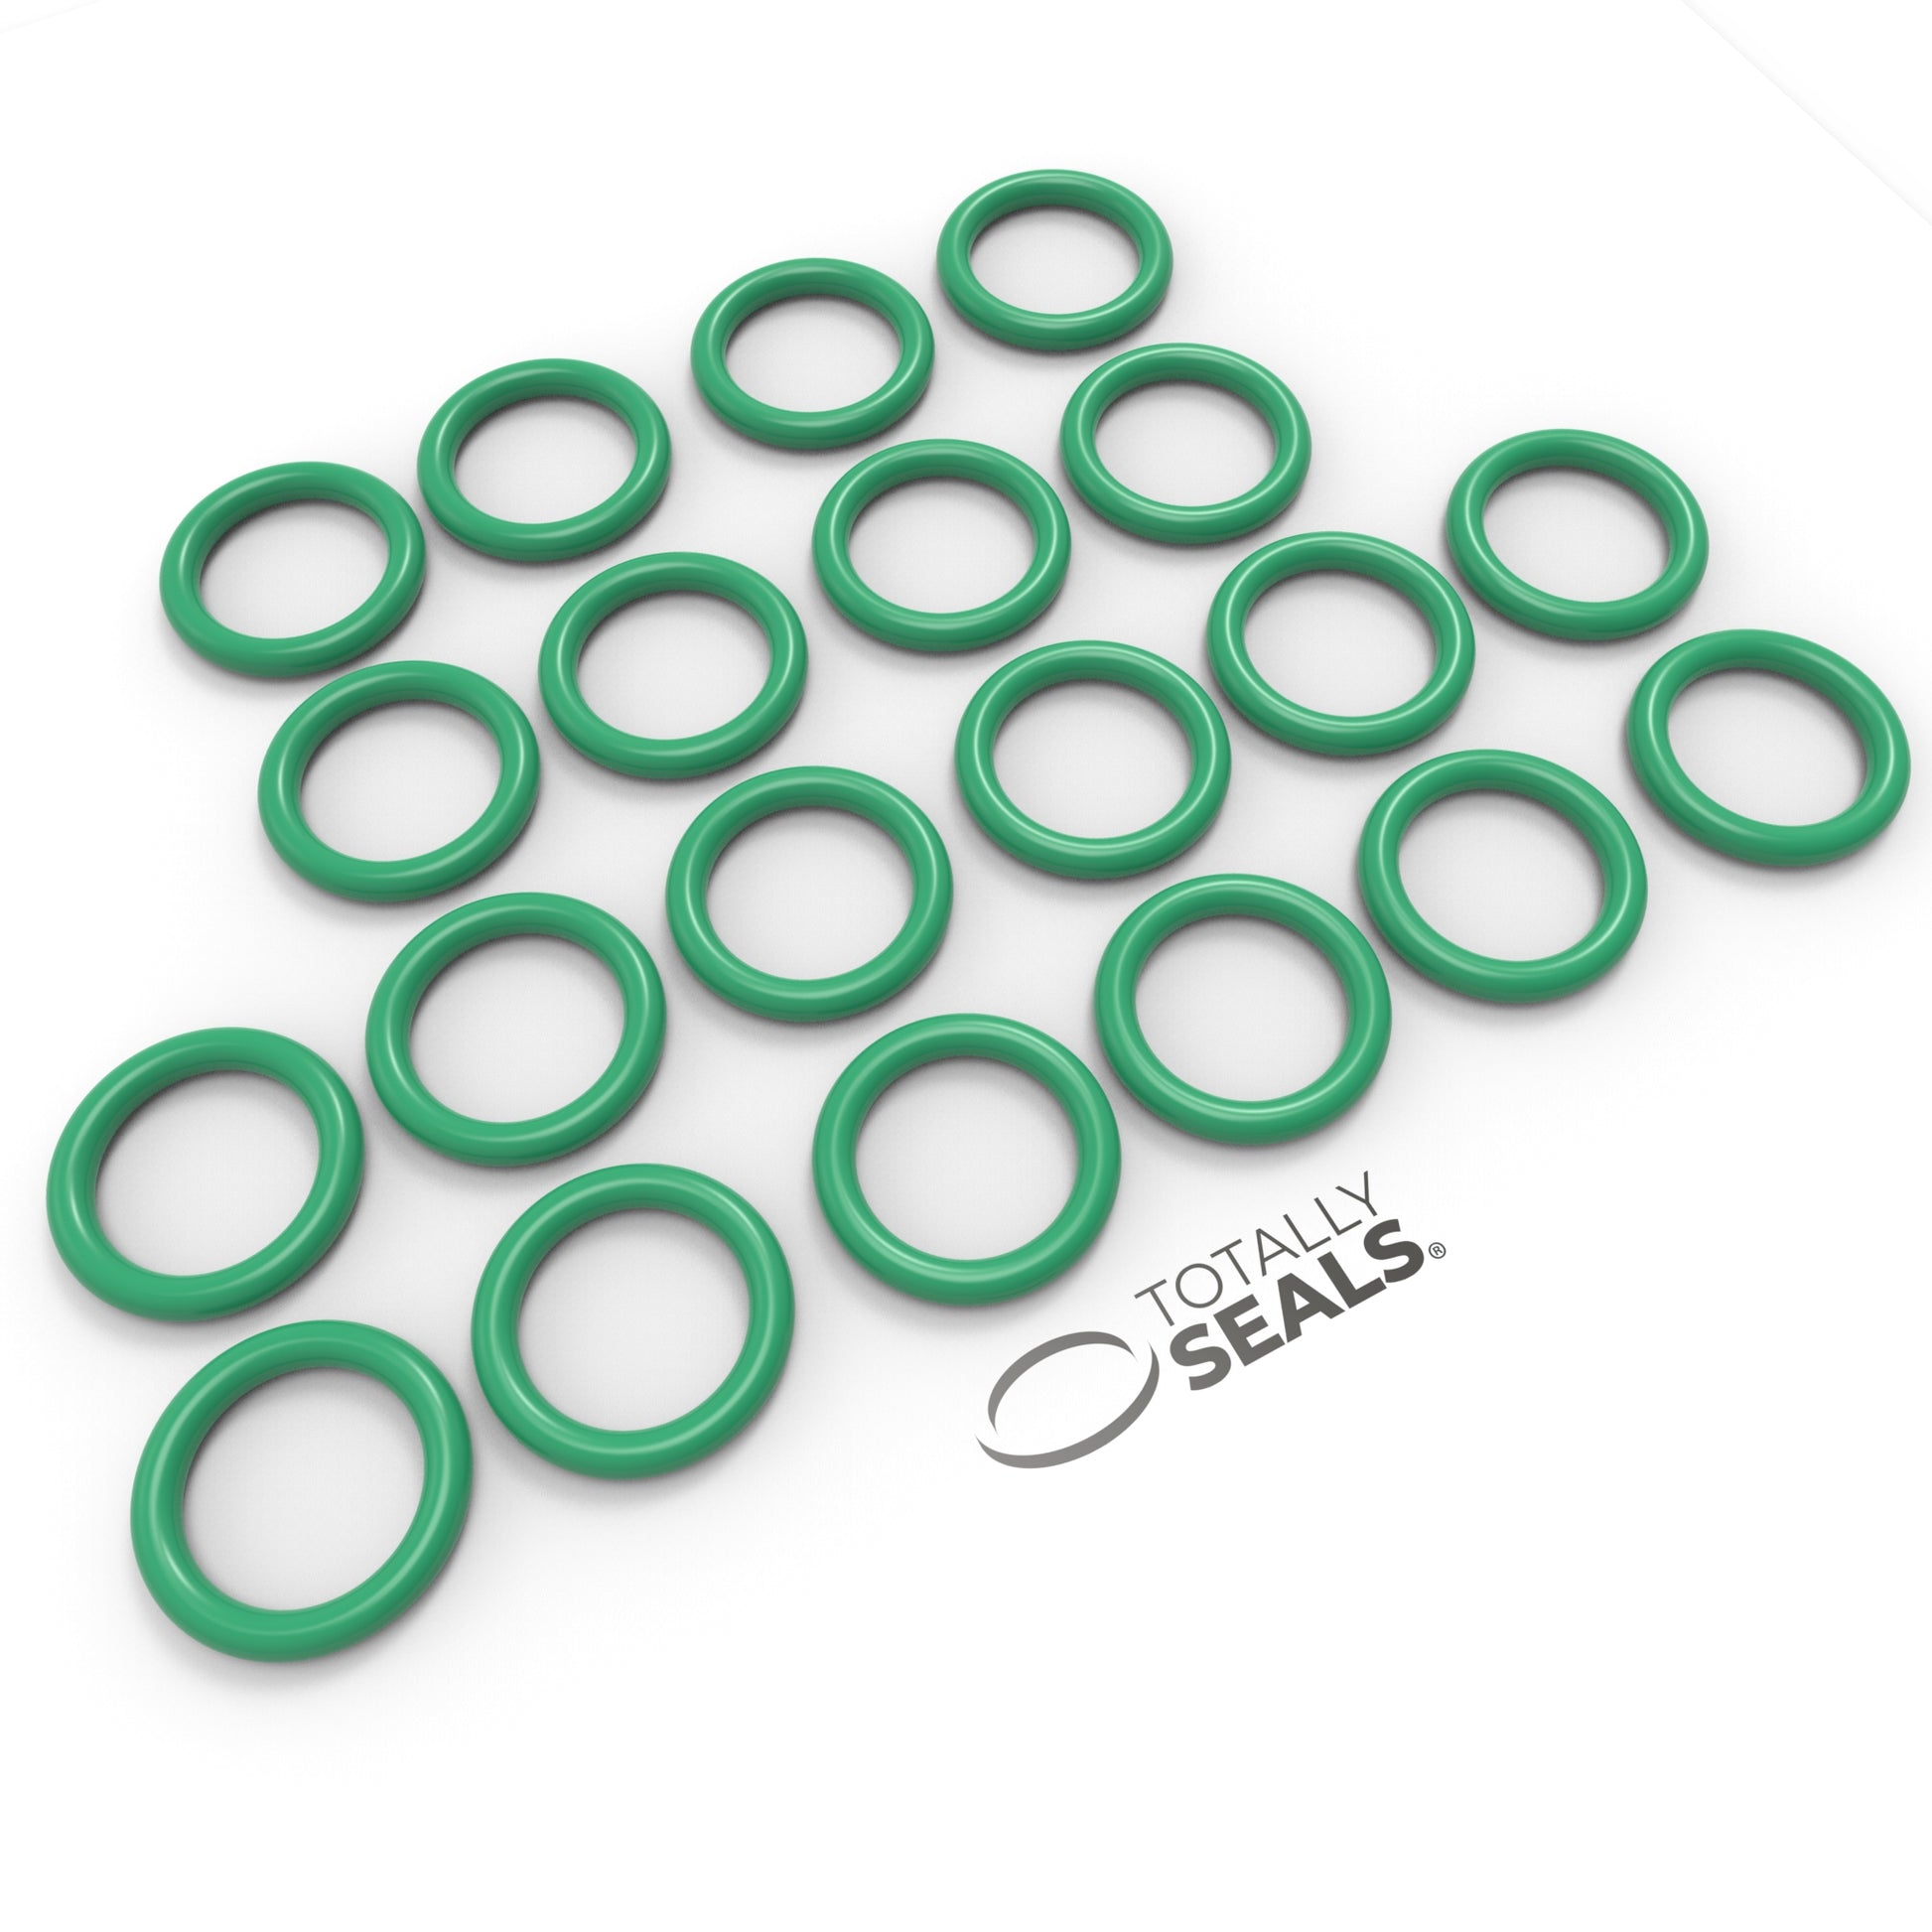 17mm x 2.5mm (22mm OD) FKM (Viton™) O-Rings - Totally Seals®